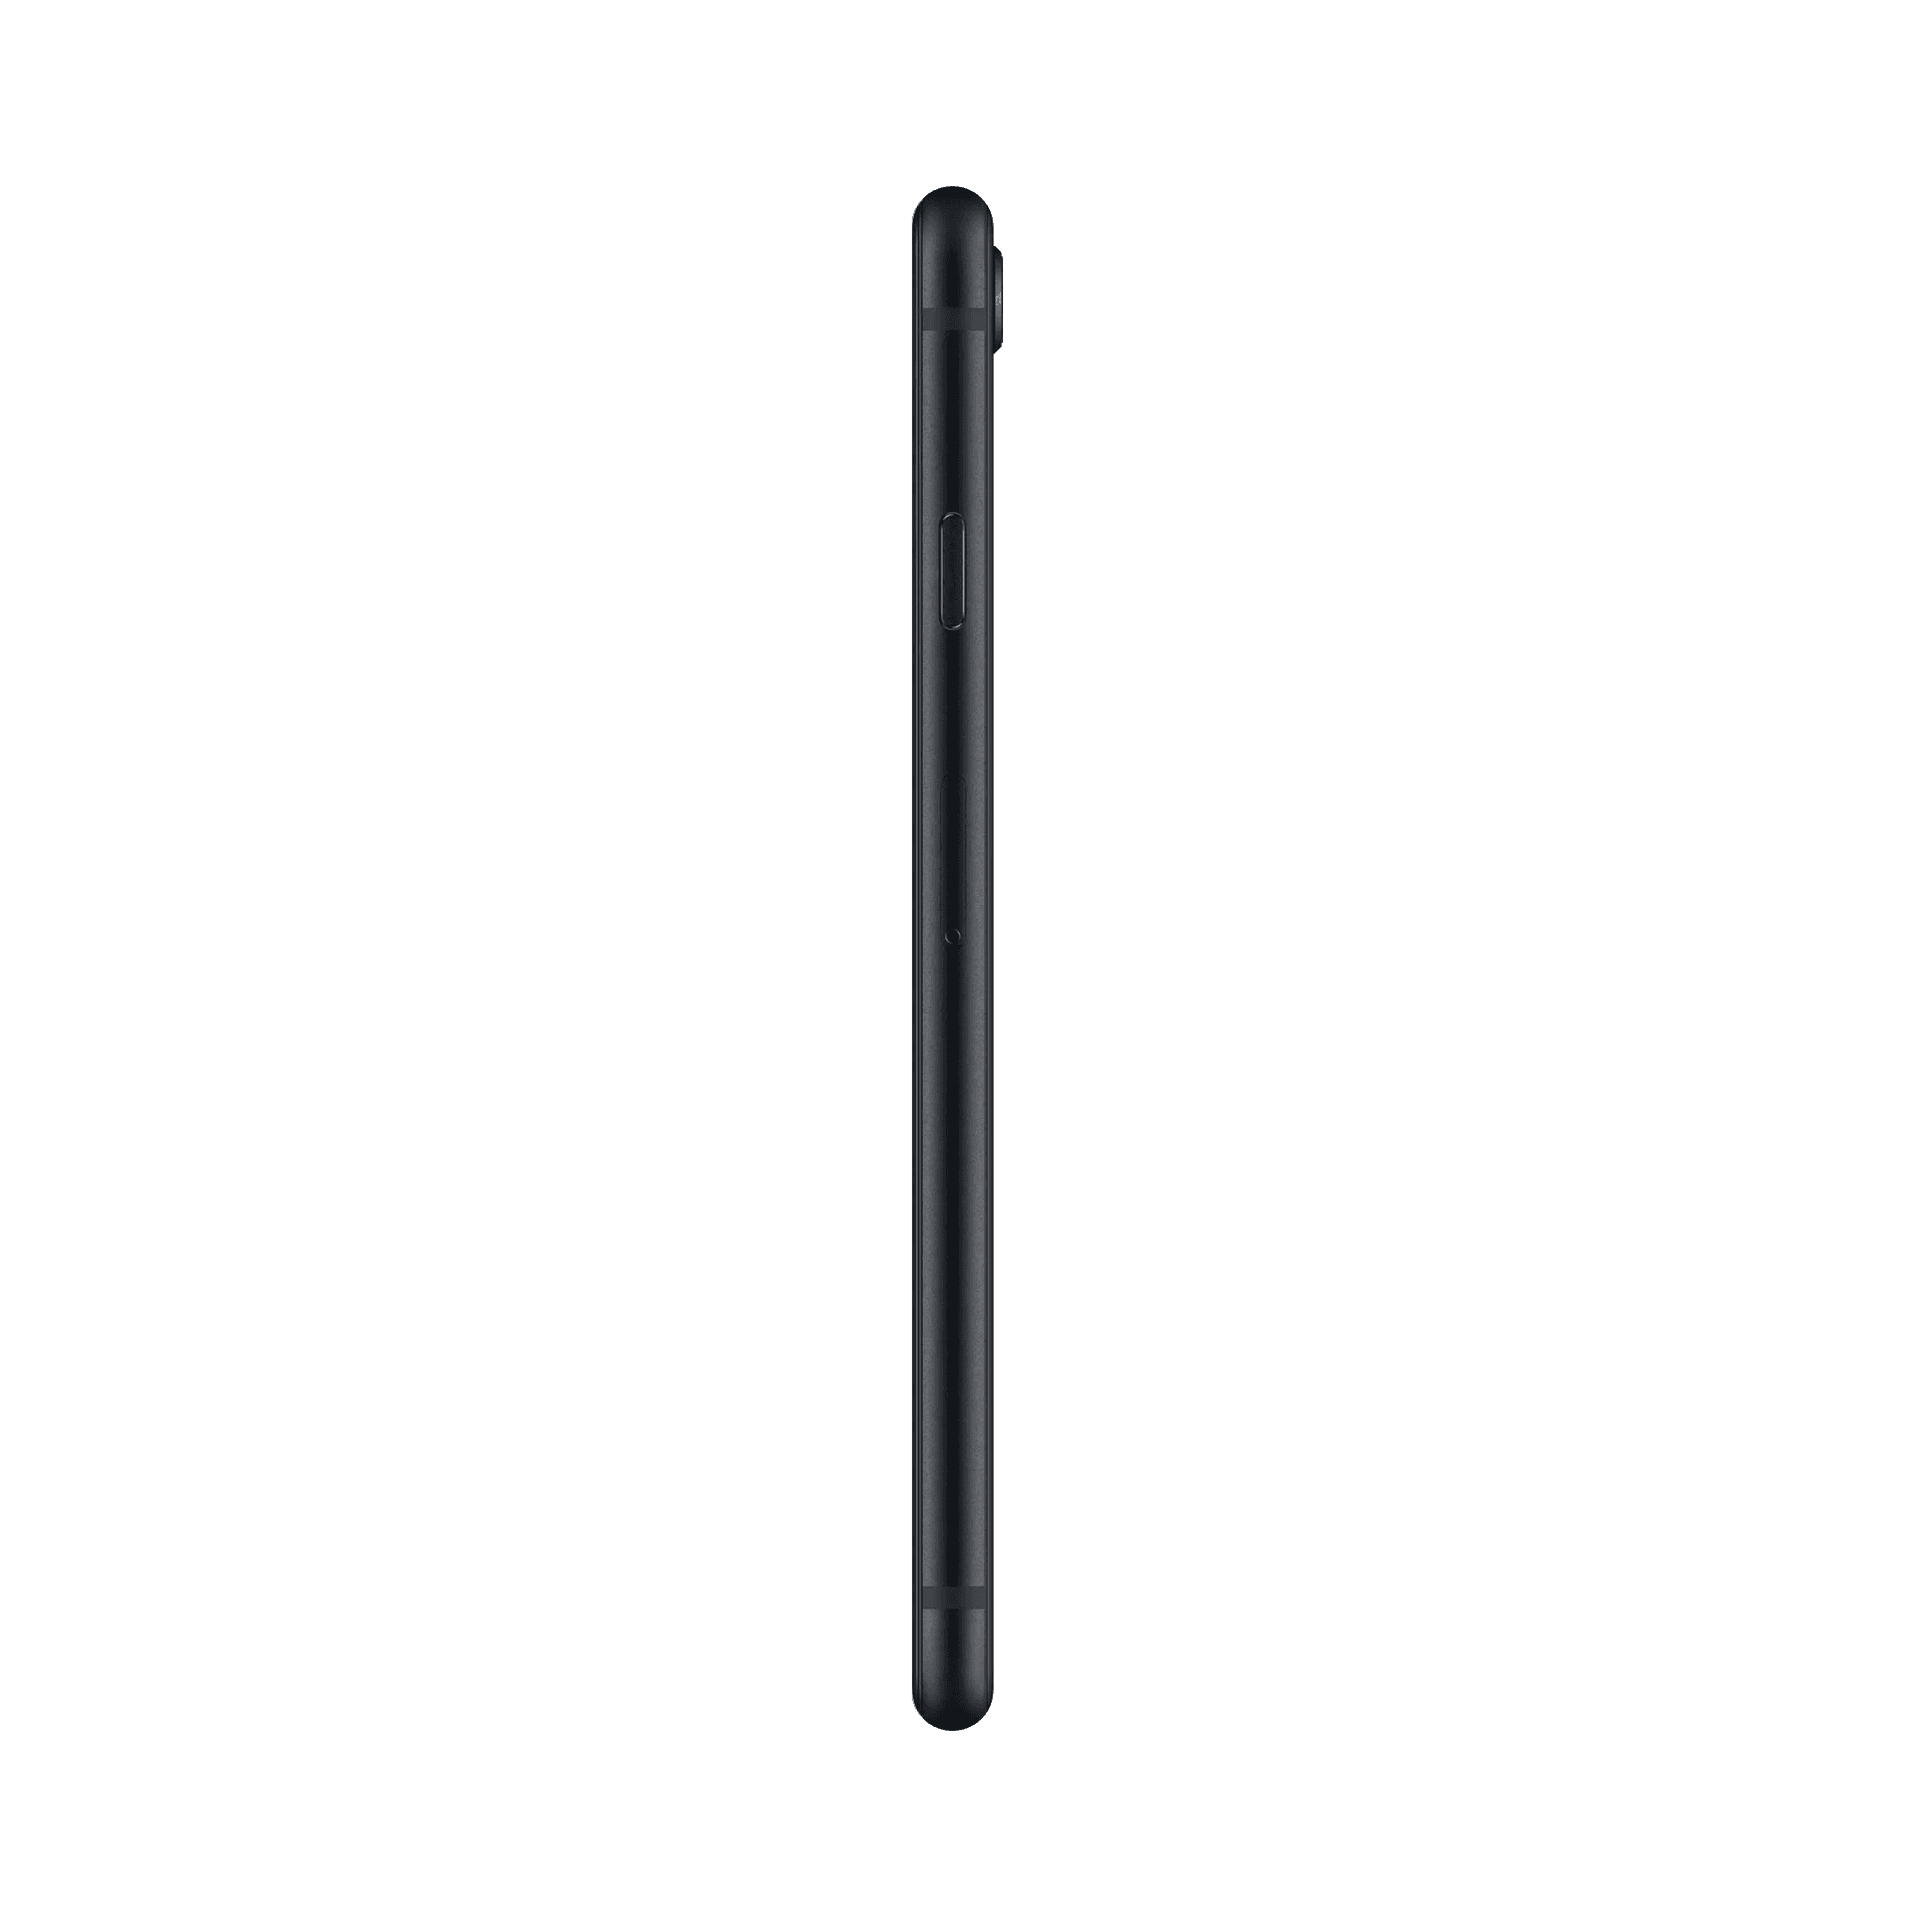 Apple iPhone SE 2020 - 64 GB - Siyah